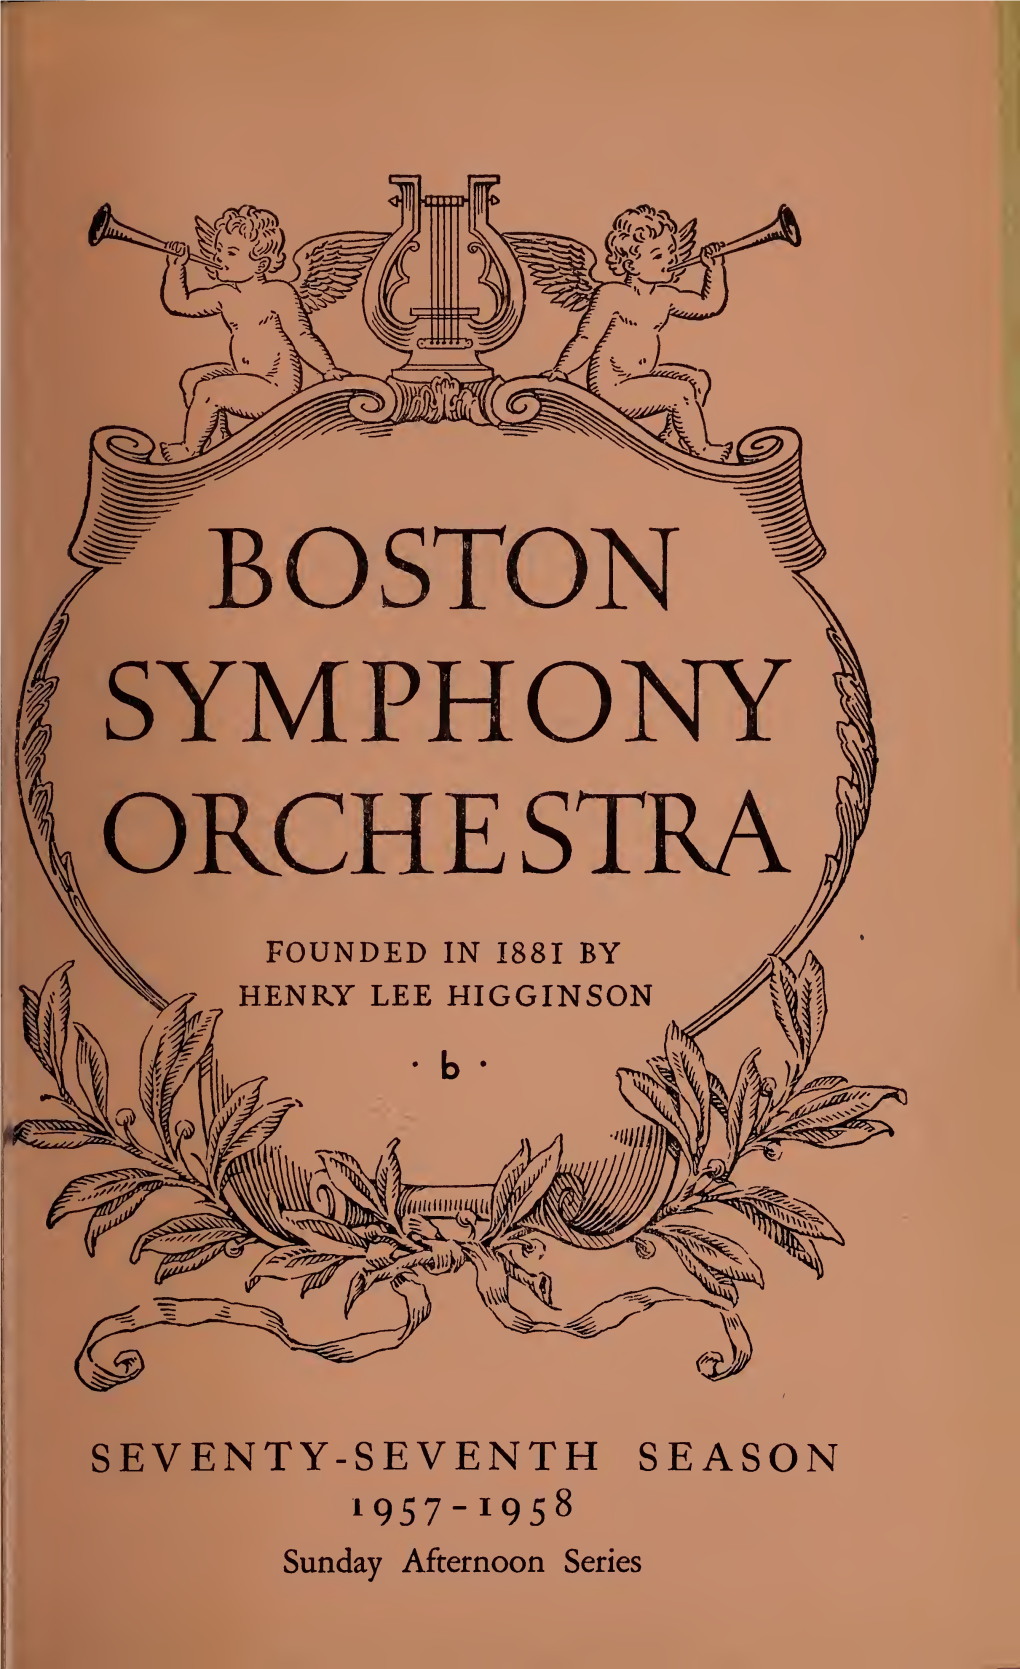 Boston Symphony Orchestra Concert Programs, Season 77, 1957-1958, Subscription